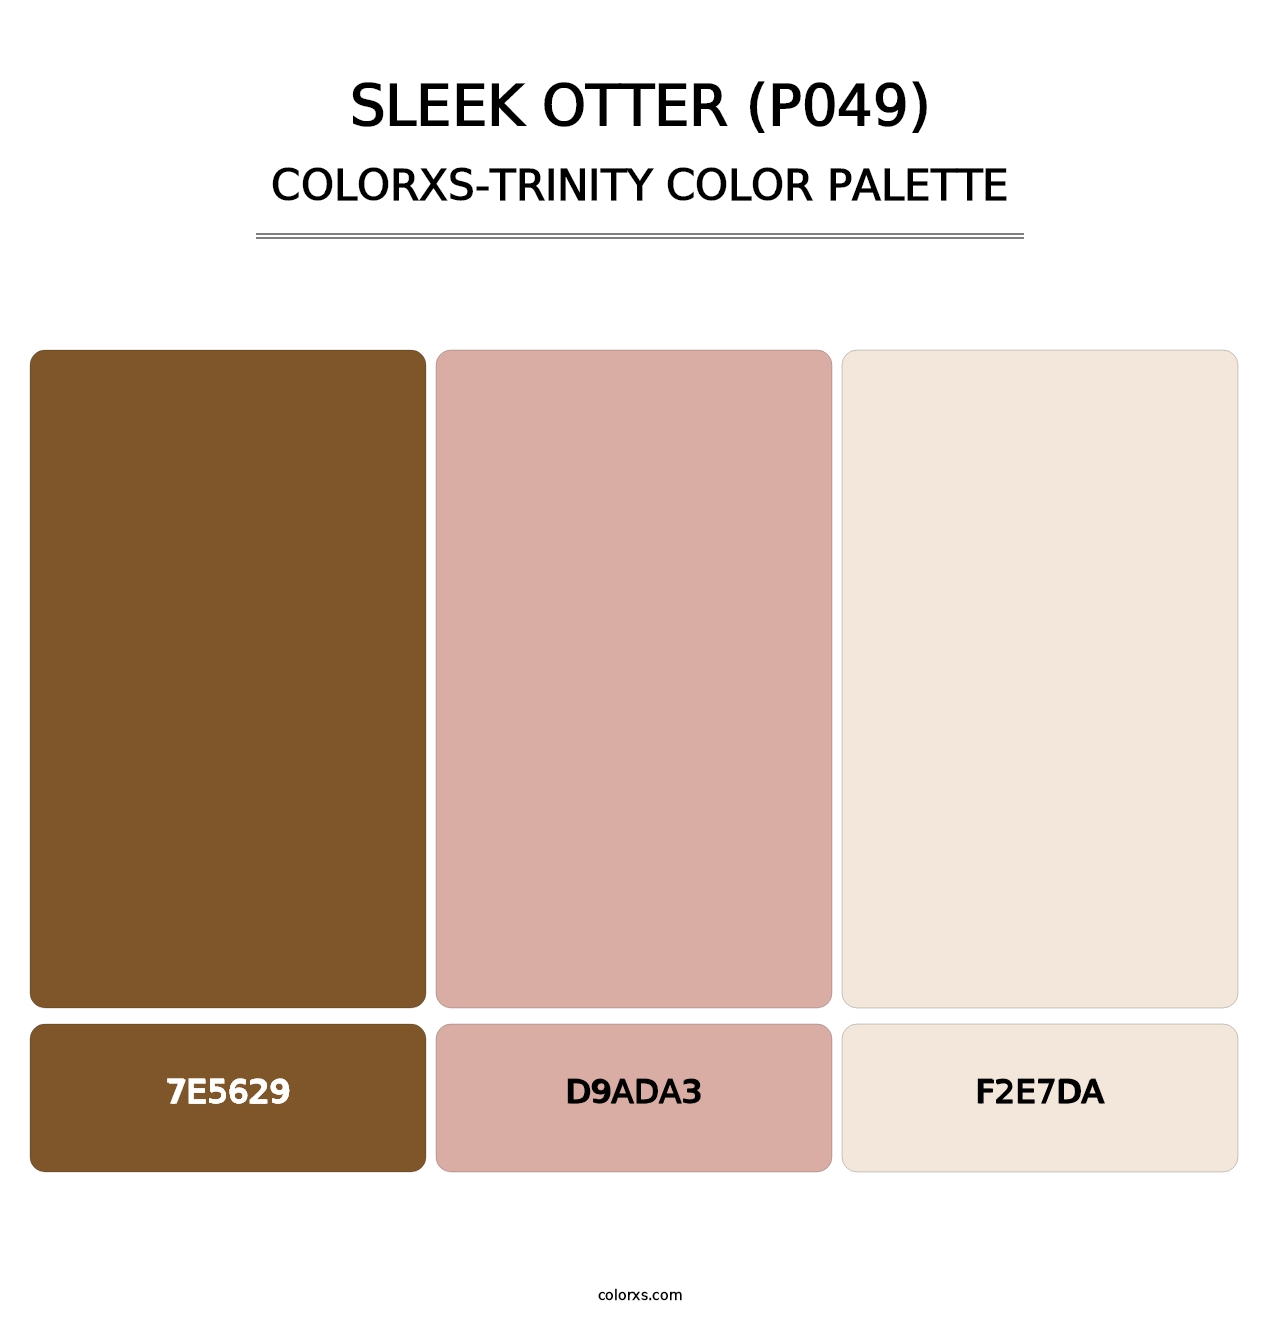 Sleek Otter (P049) - Colorxs Trinity Palette